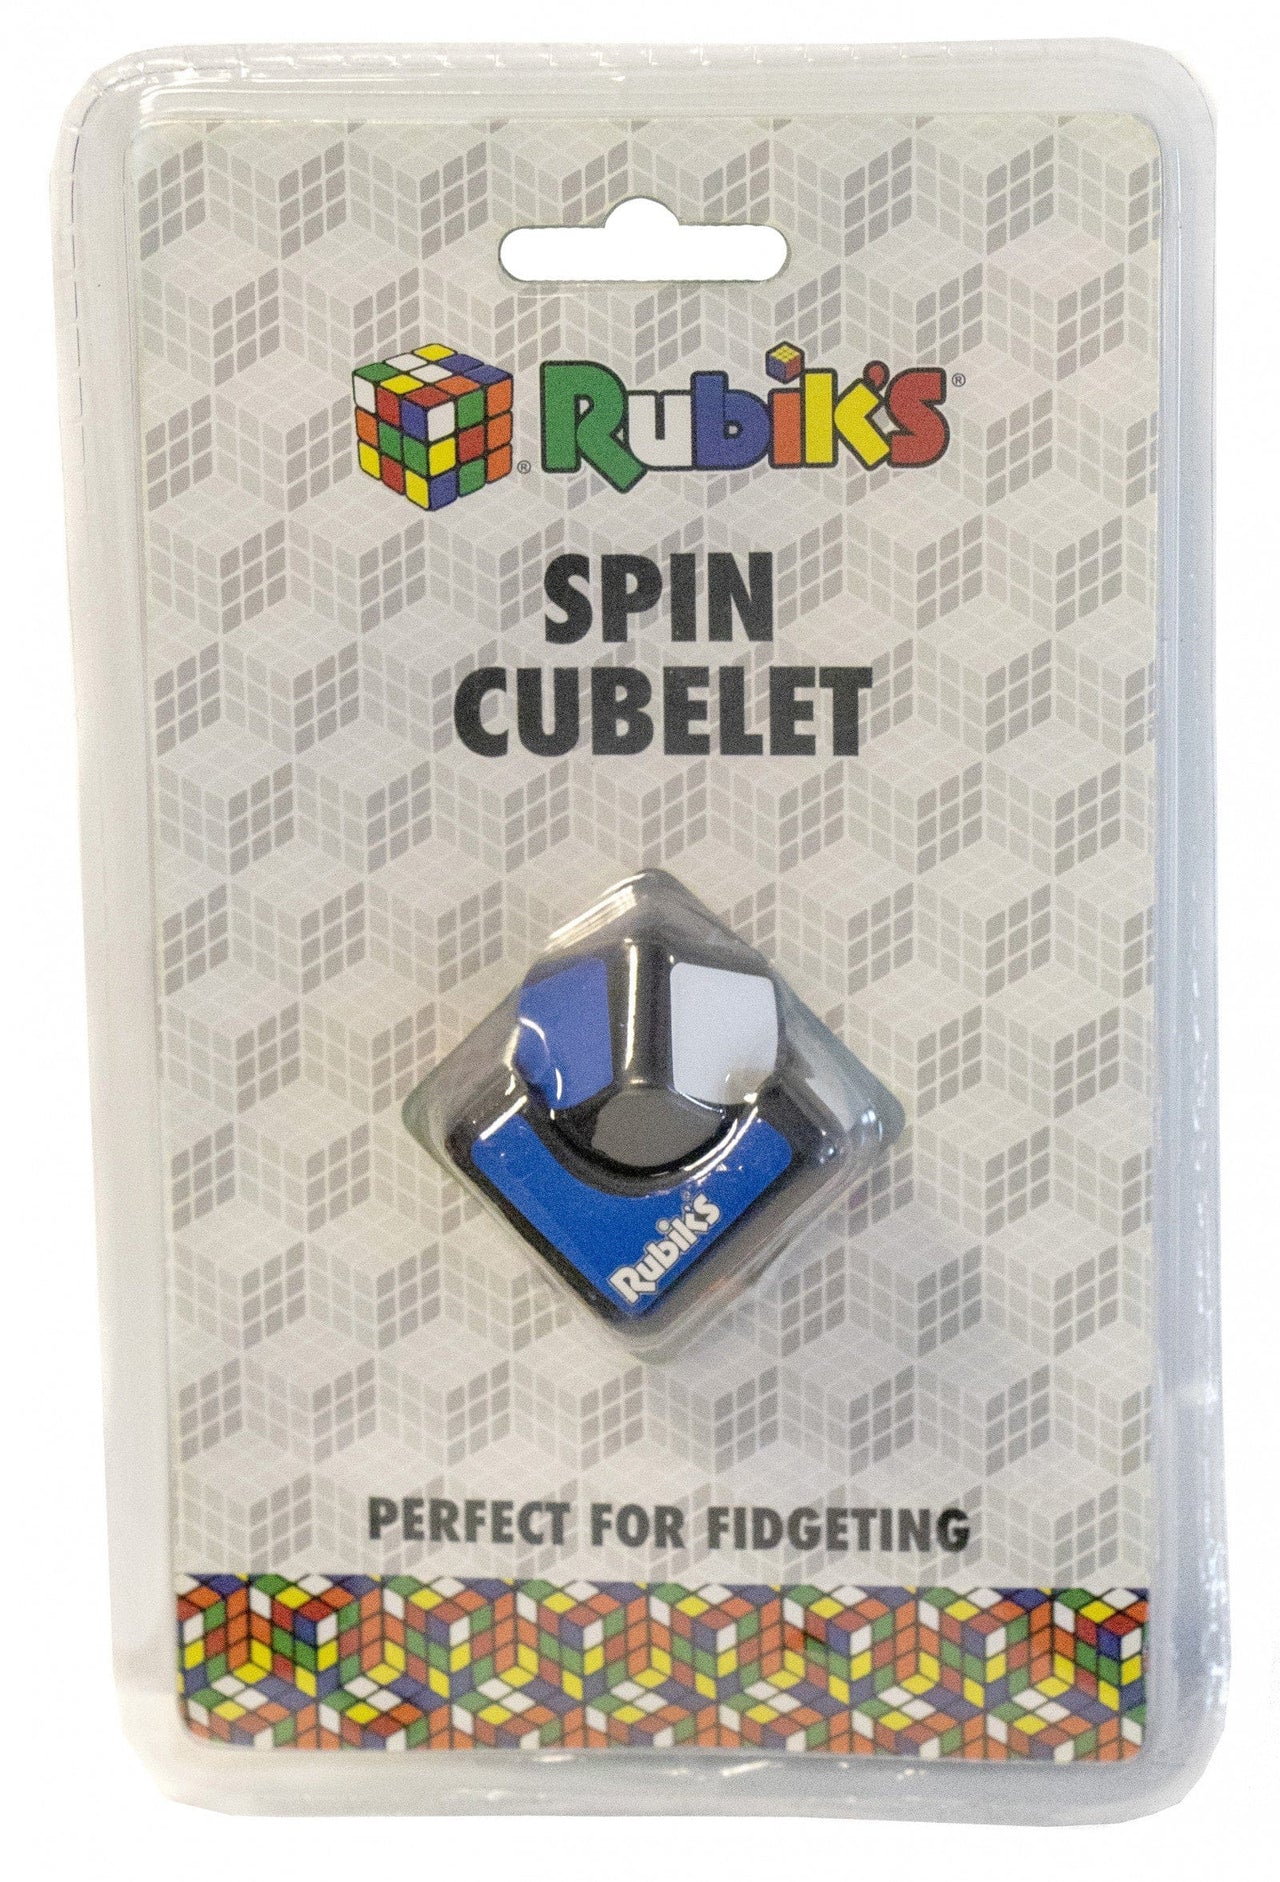 rubiks sensory Rubiks Spin Cubelet